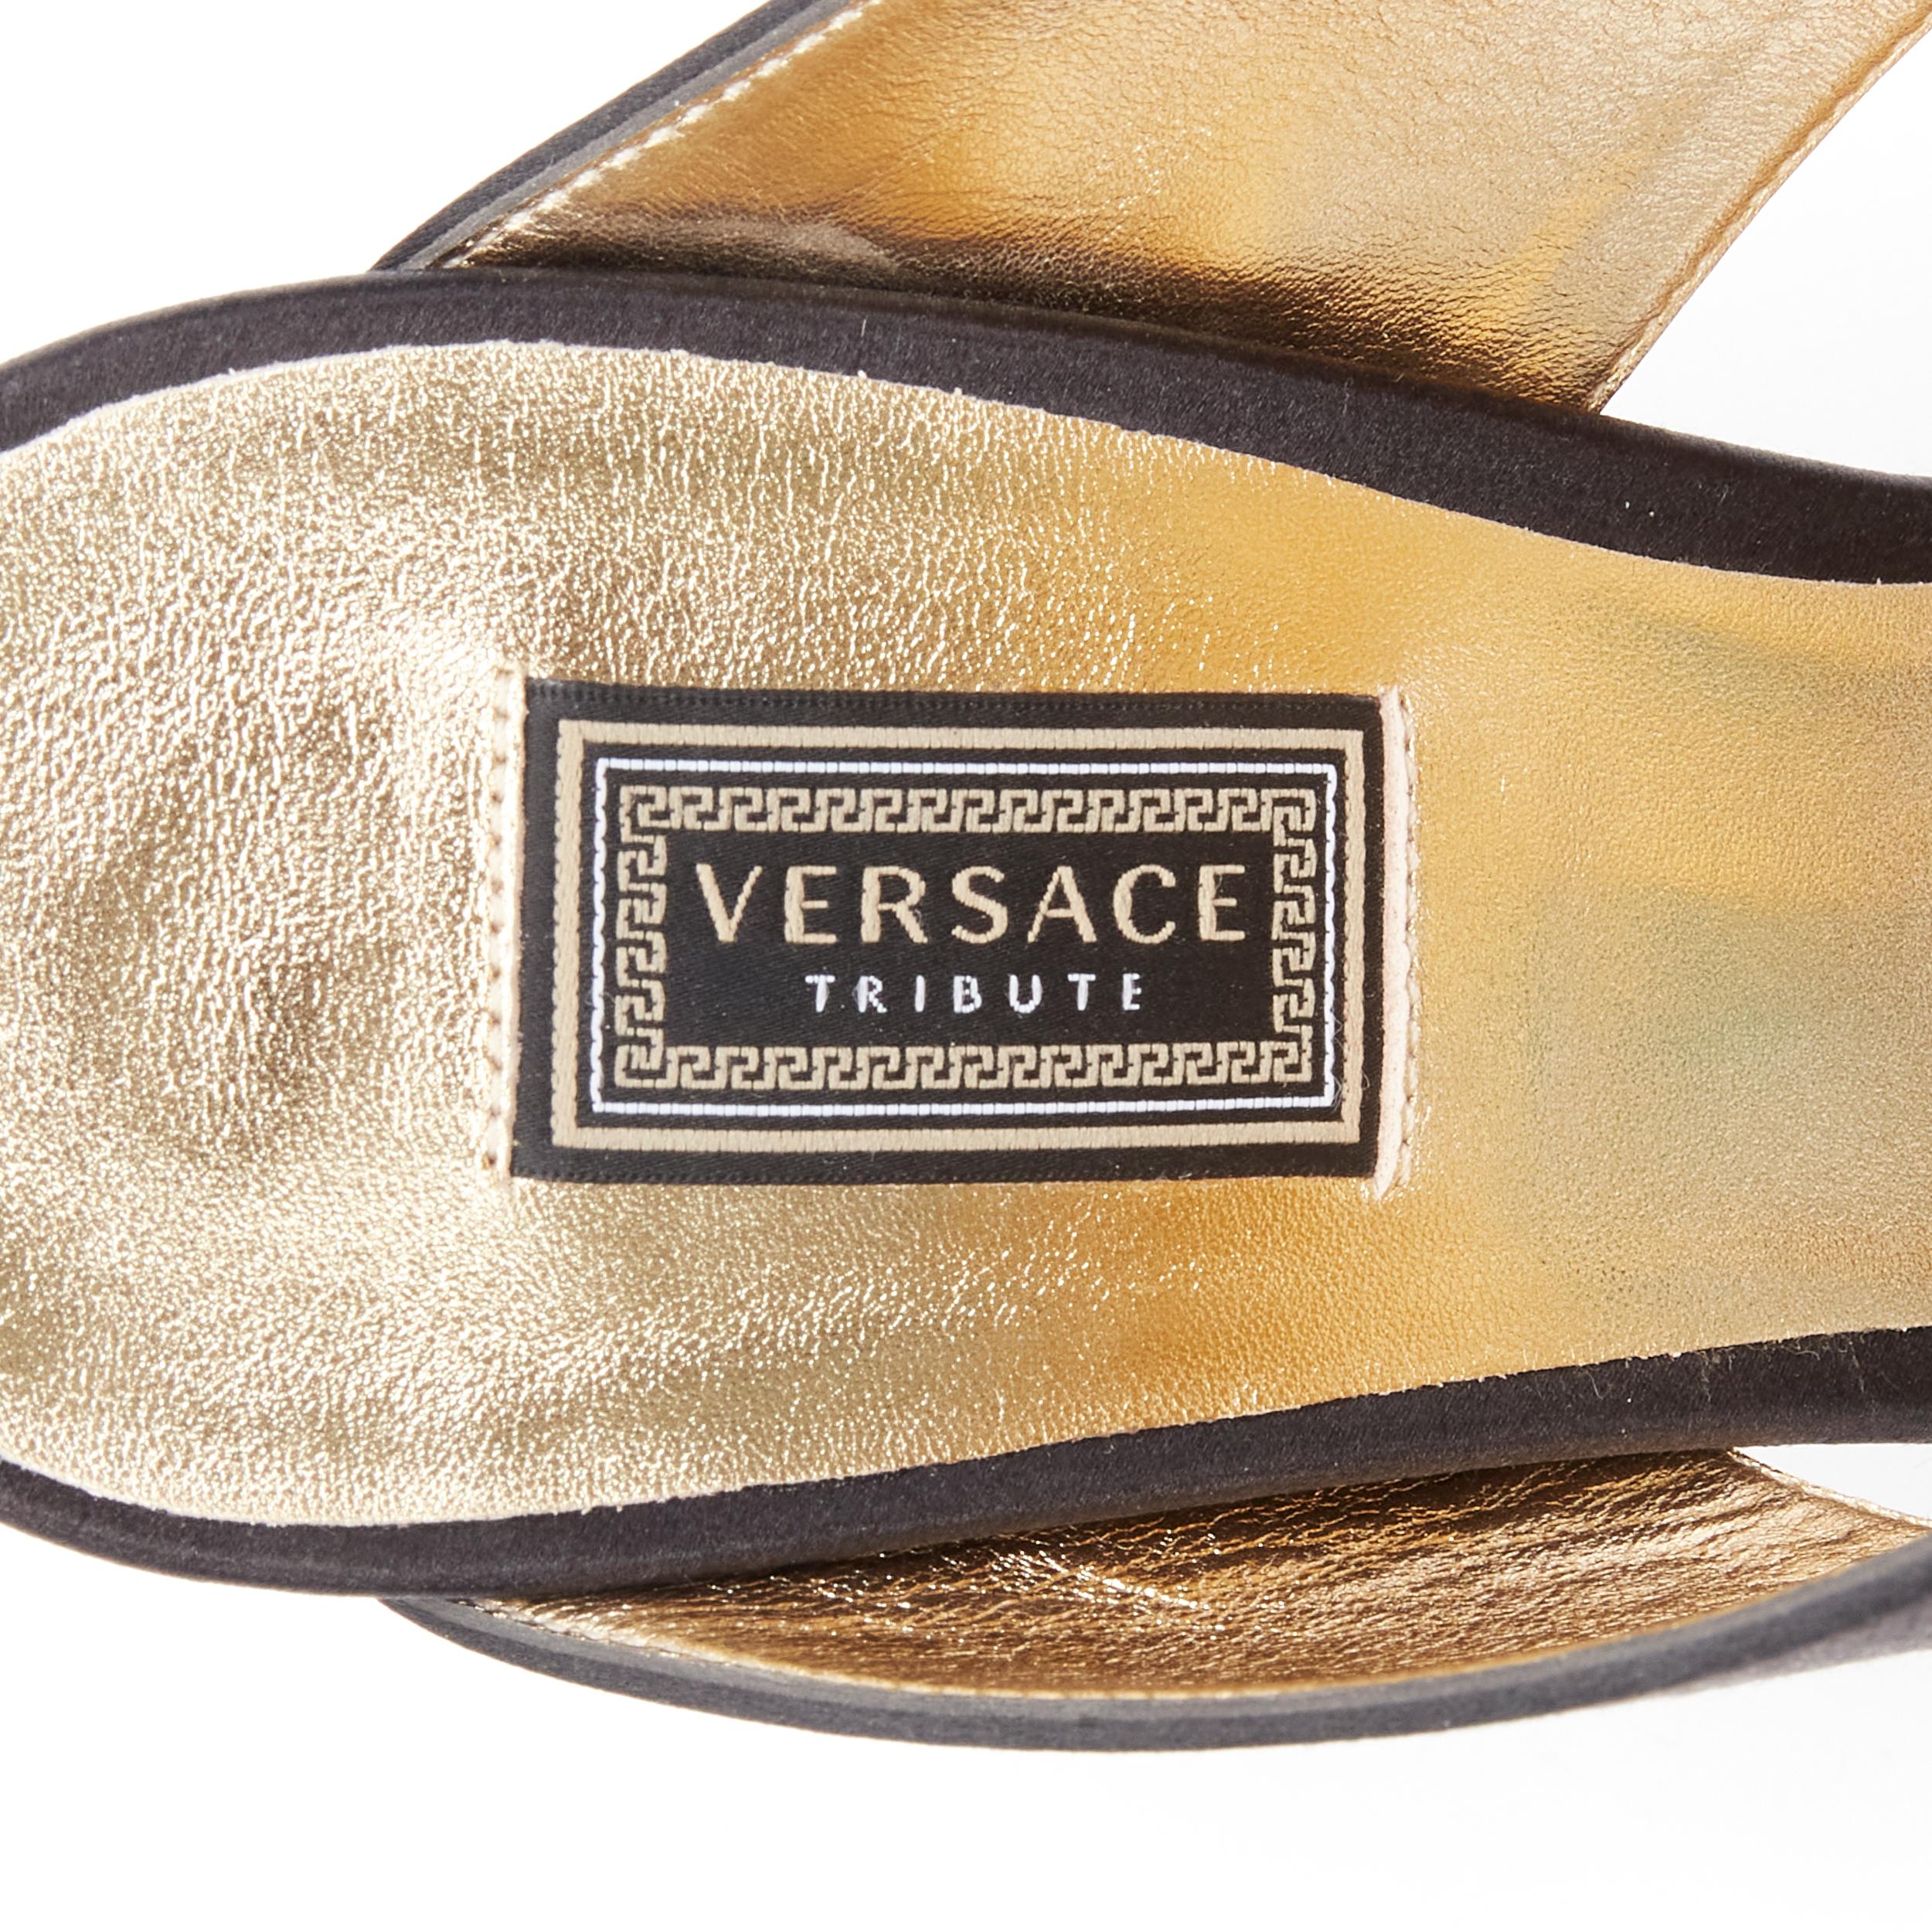 new VERSACE 2018 Tribute Byzantine Cross Jewel crystal black satin sandals EU38 For Sale 5